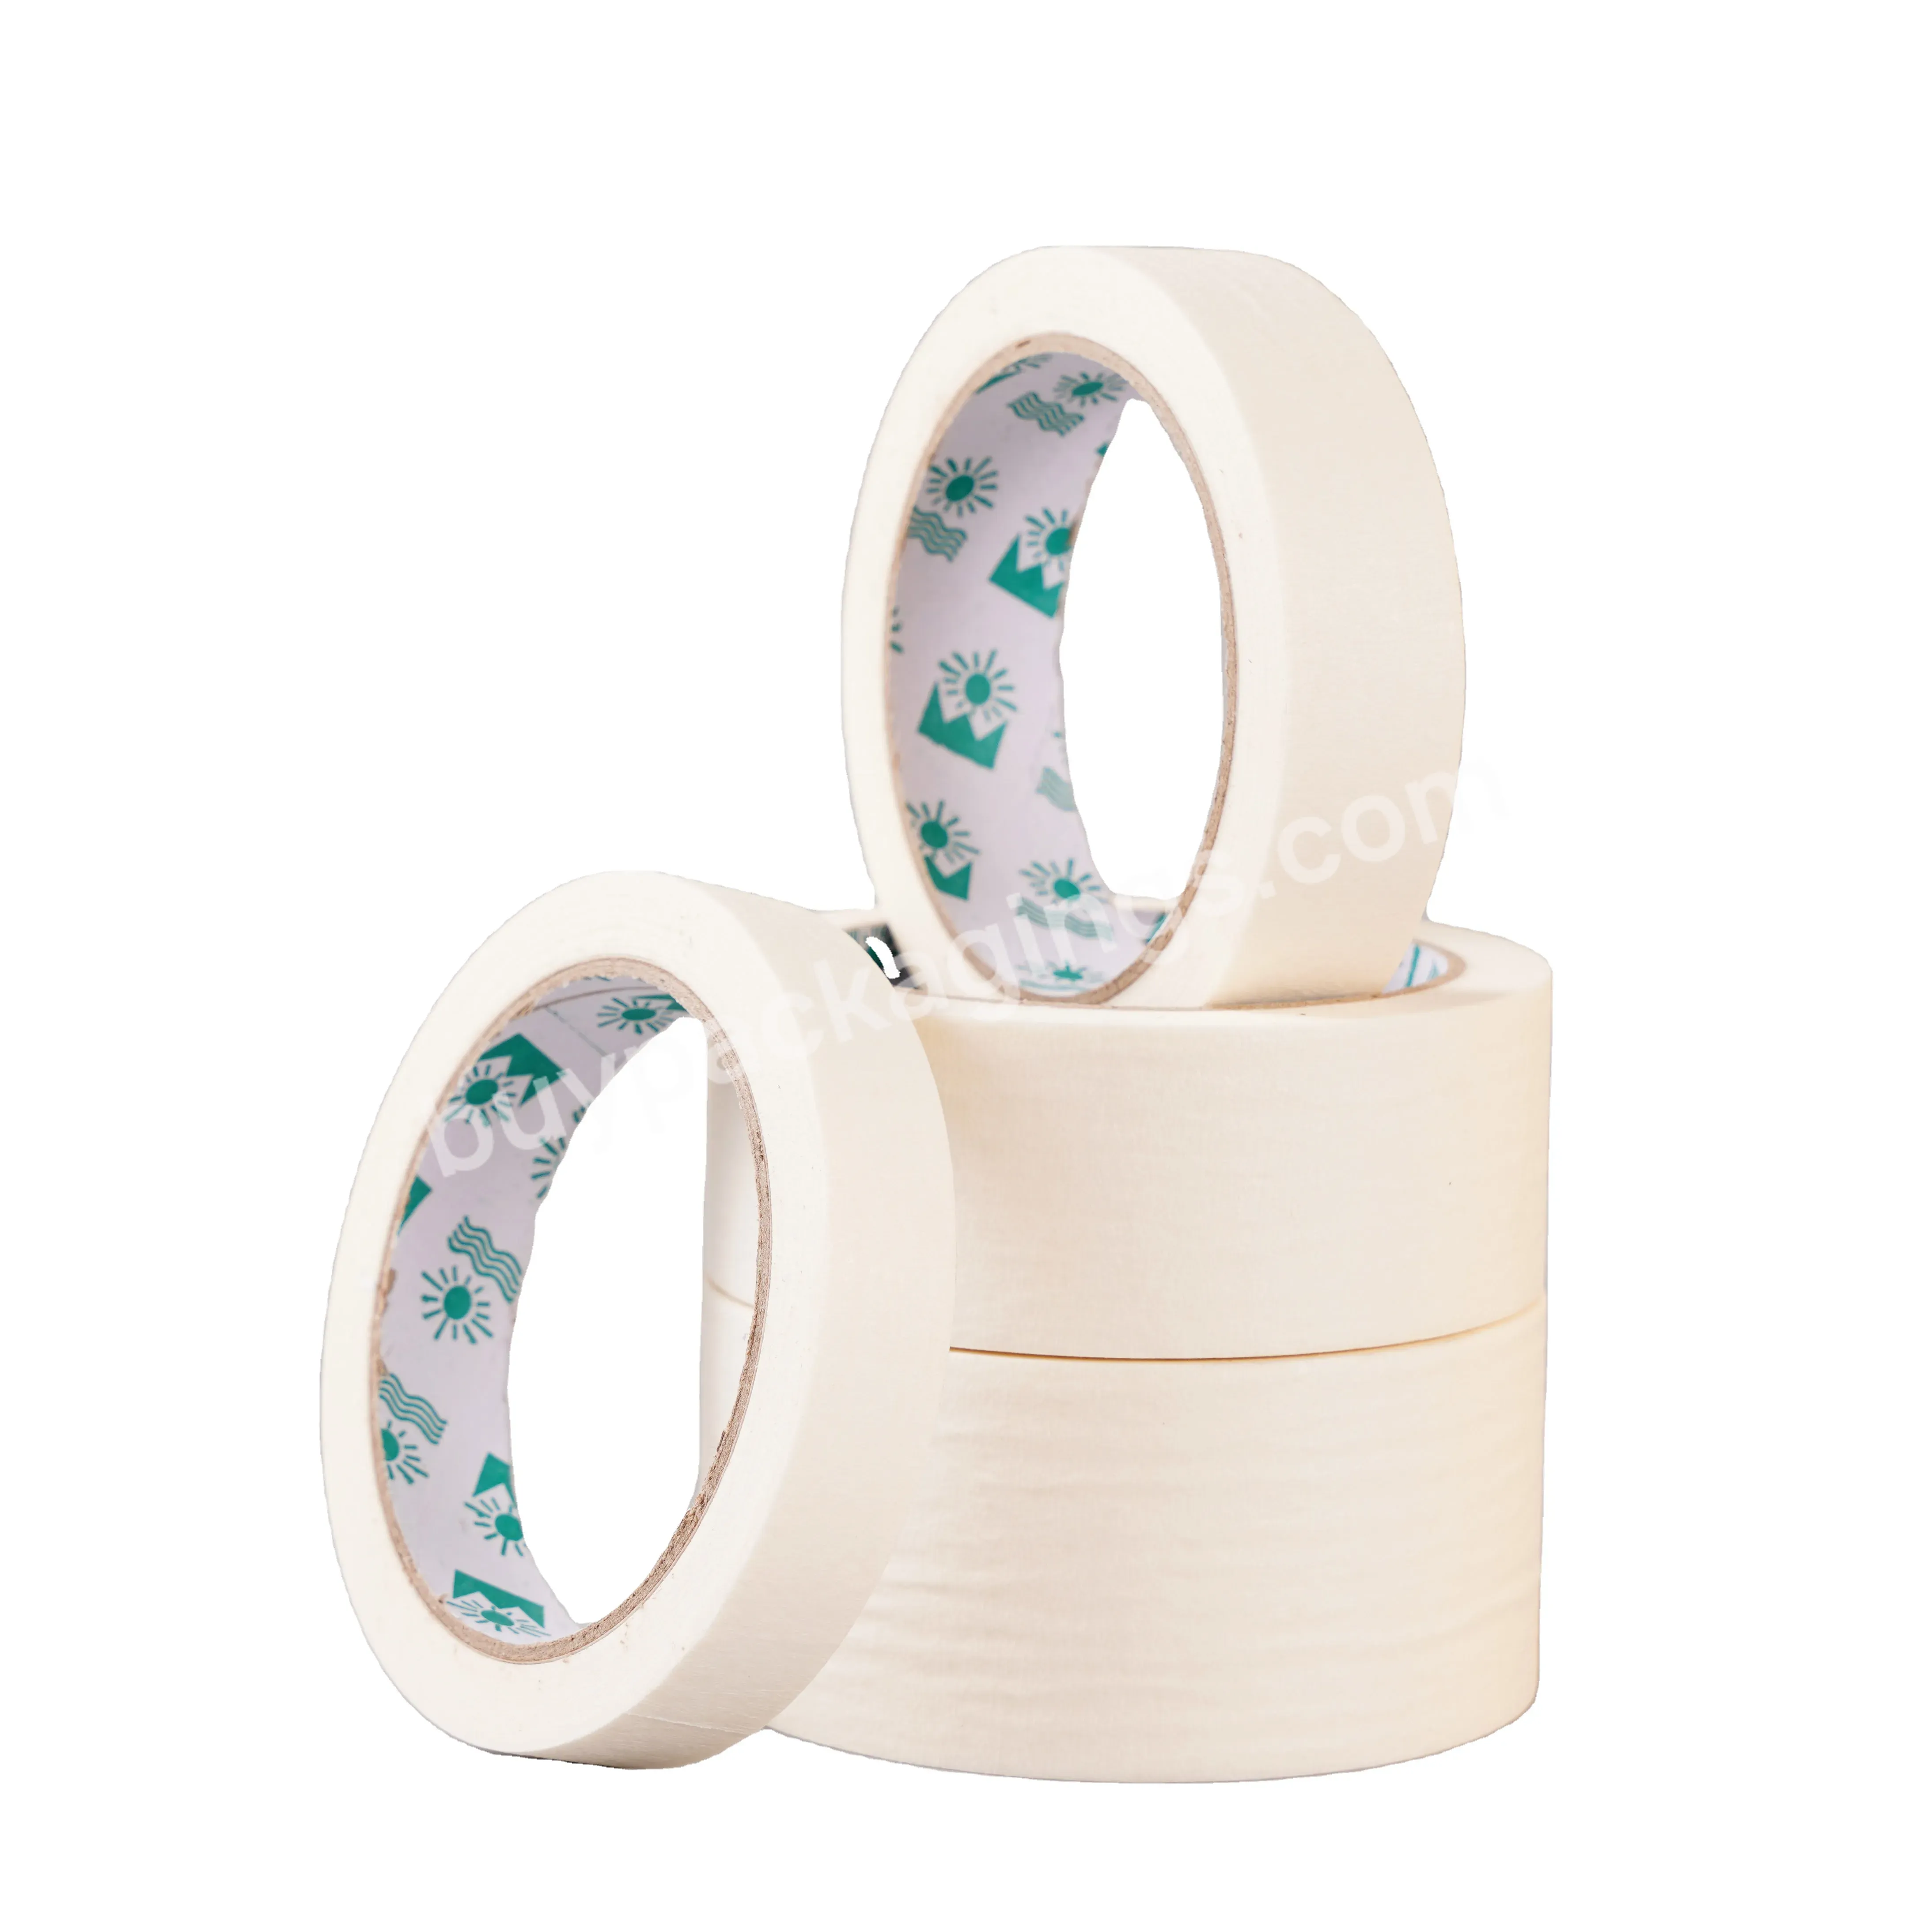 Wholesale Kawaii Washi Tape Custom Make Paper Masking Tape For Painting - Buy Washi Tape Wholesale Masking Tape For Painting,Kawaii Washi Tape,Custom Make Washi Tape.